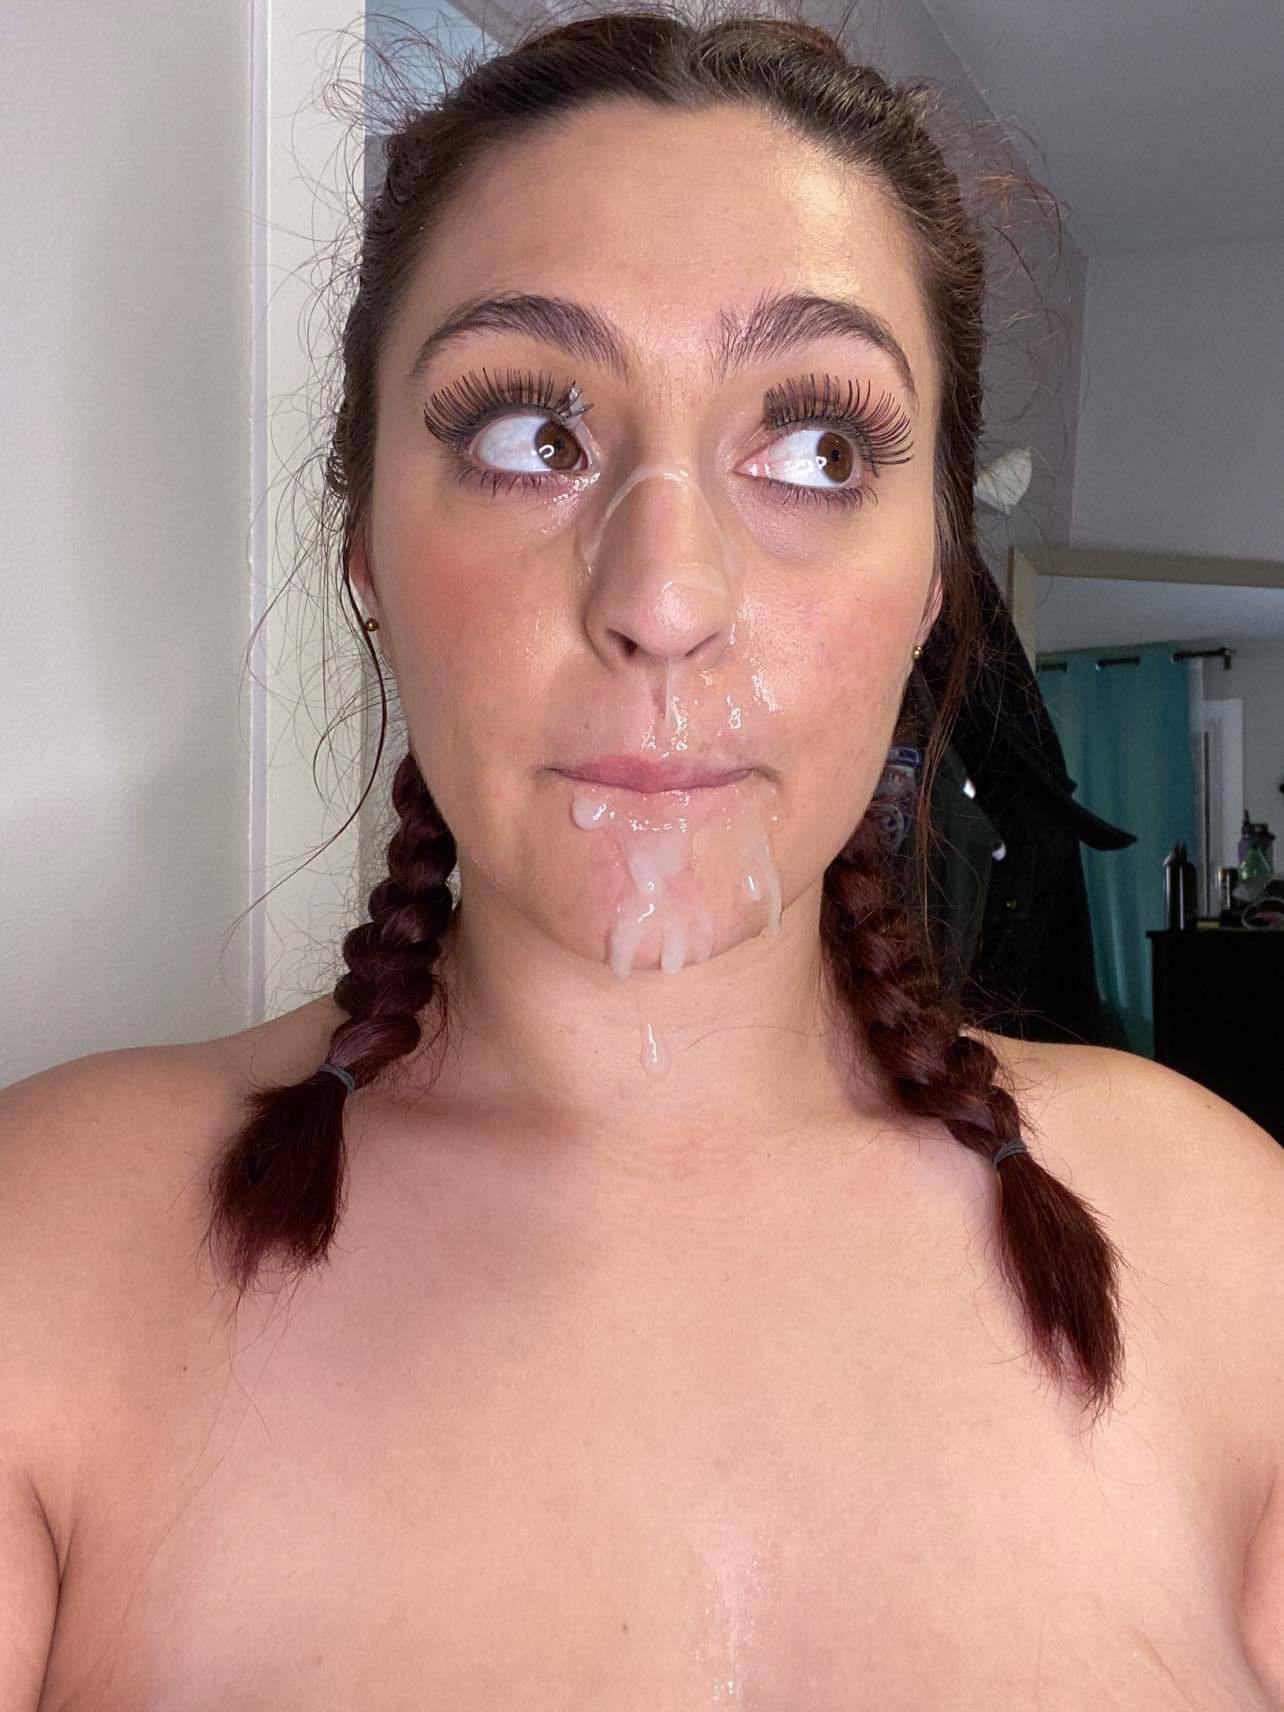 milf fucks boy in shower brazzers #facial #brunette #pigtails #braids